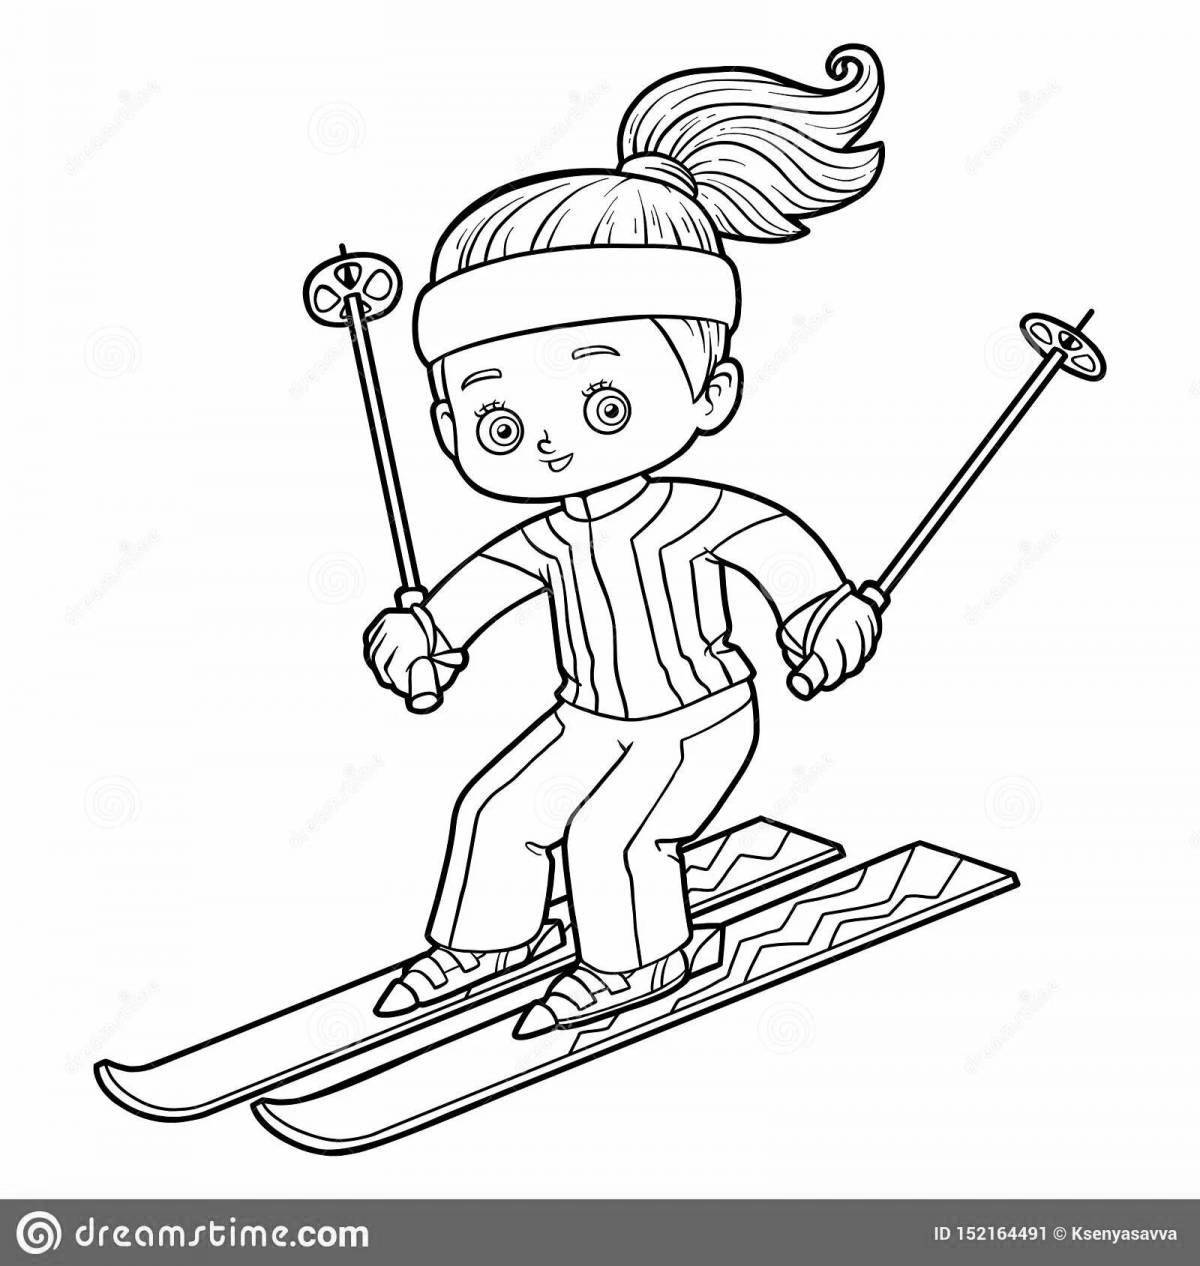 Авантюрист на лыжах